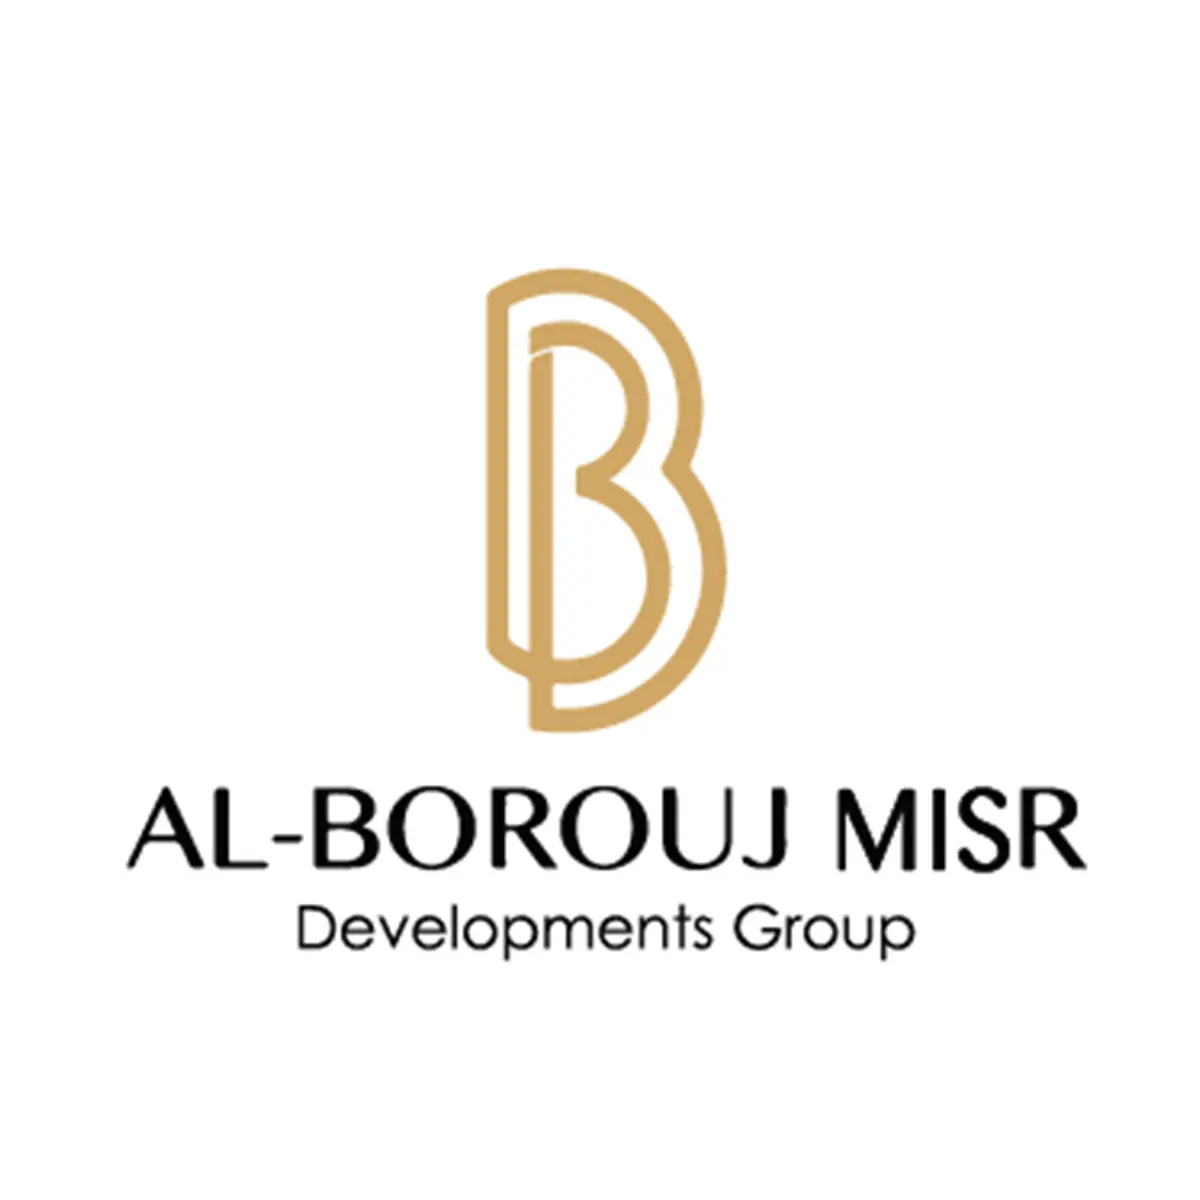 Al-Borouj misr Development logo